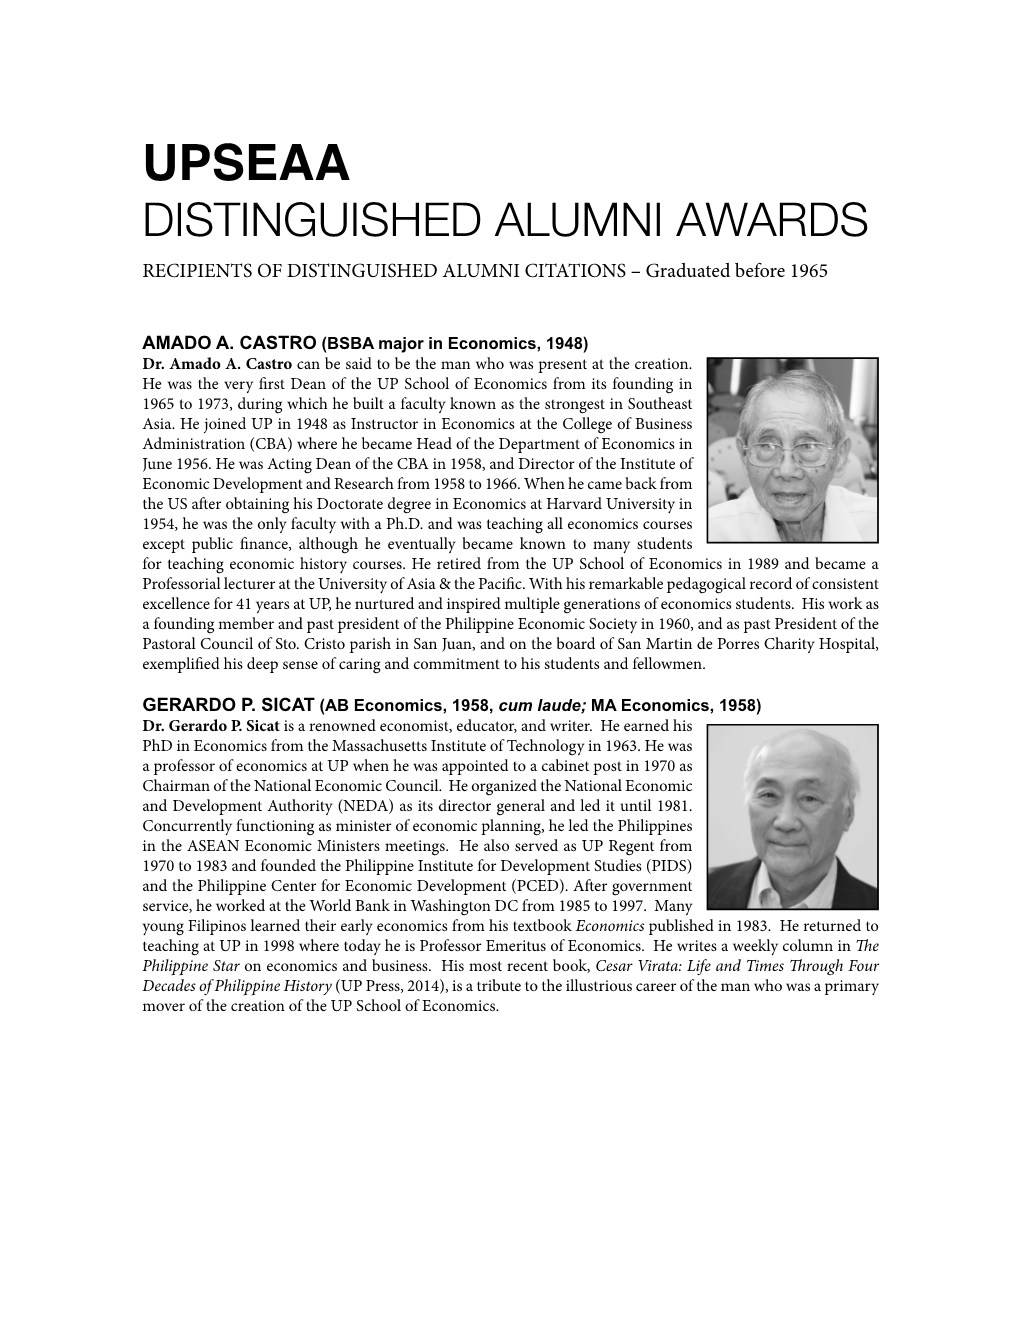 UPSEAA DISTINGUISHED ALUMNI AWARDS RECIPIENTS of DISTINGUISHED ALUMNI CITATIONS – Graduated Before 1965